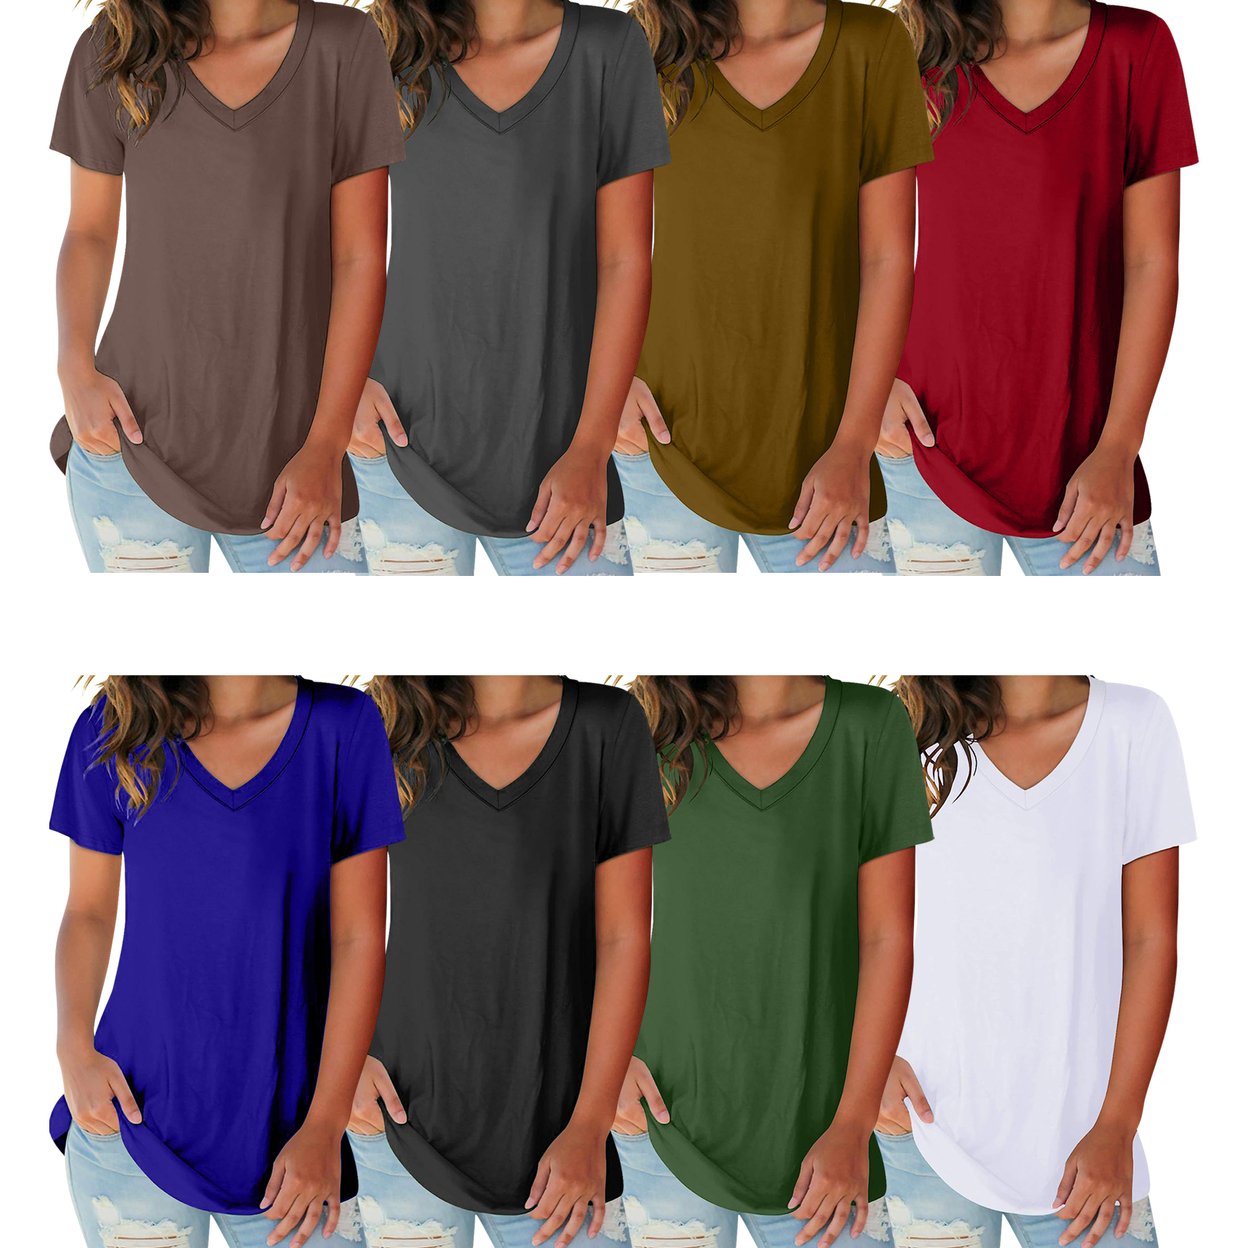 3-Pack: Women's Ultra Soft Smooth Cotton Blend Basic V-Neck Short Sleeve Shirts - Black, White, Grey, Xx-large